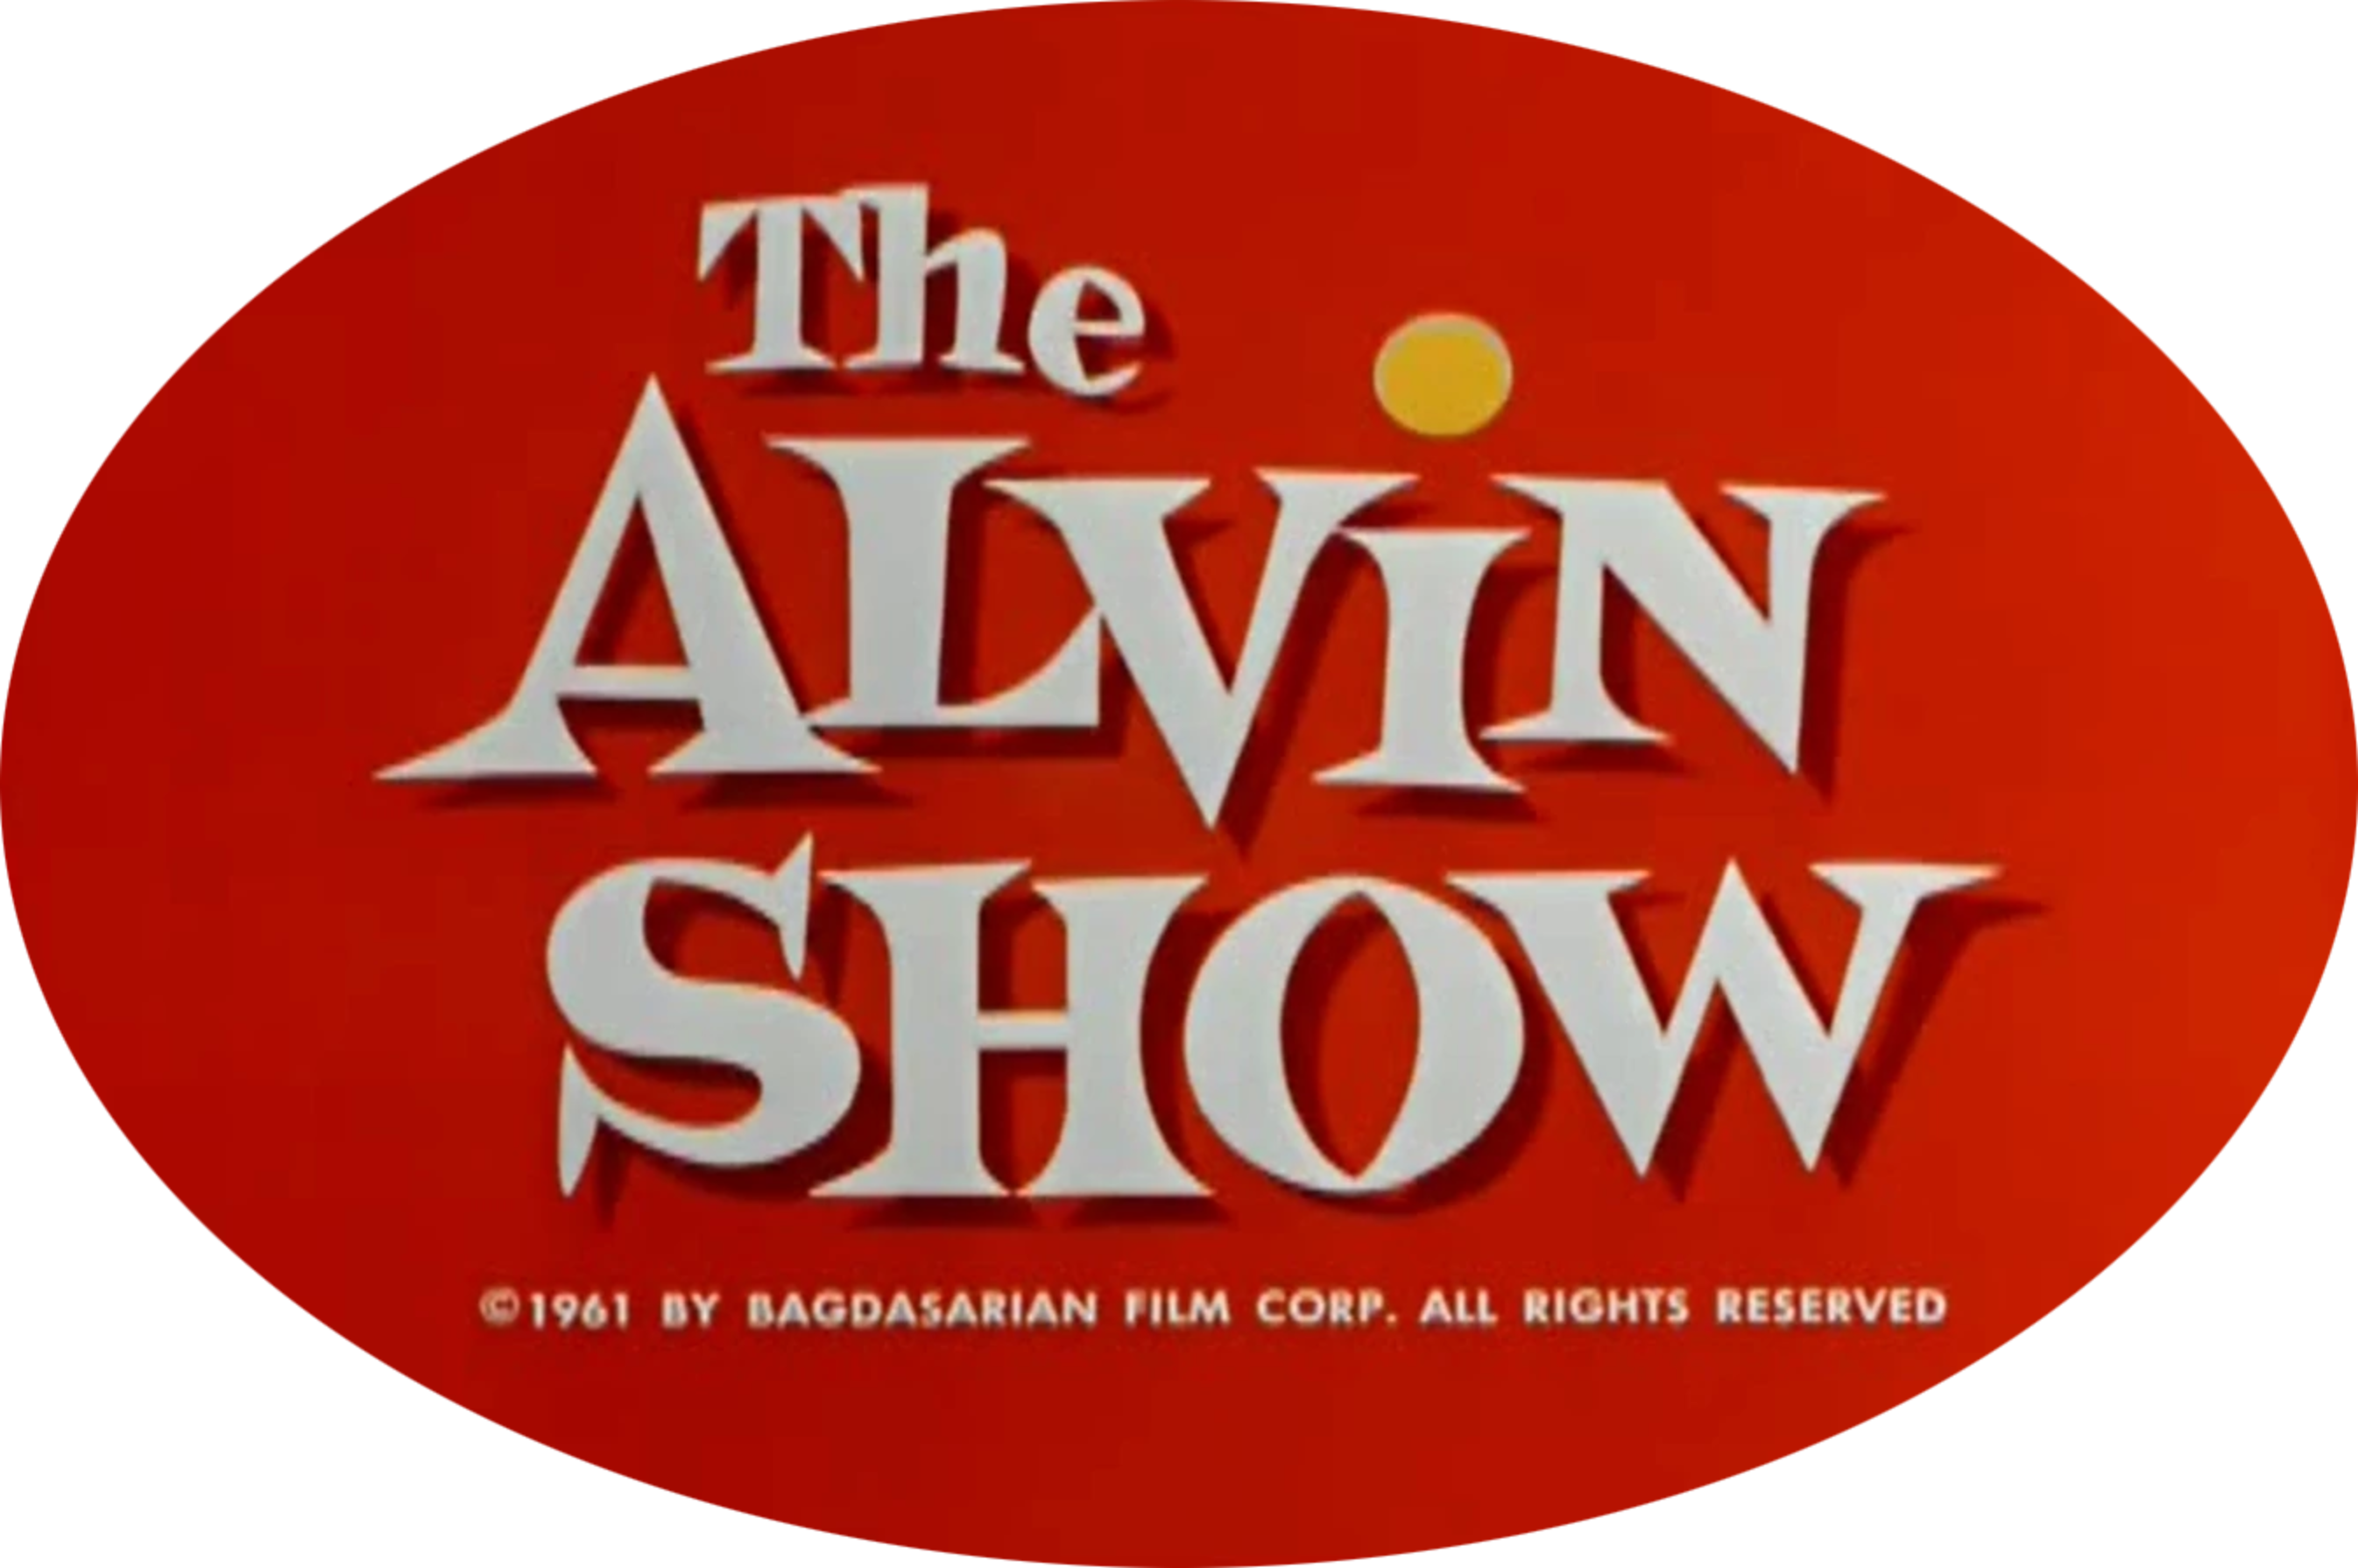 The Alvin Show Complete (2 DVDs Box Set)